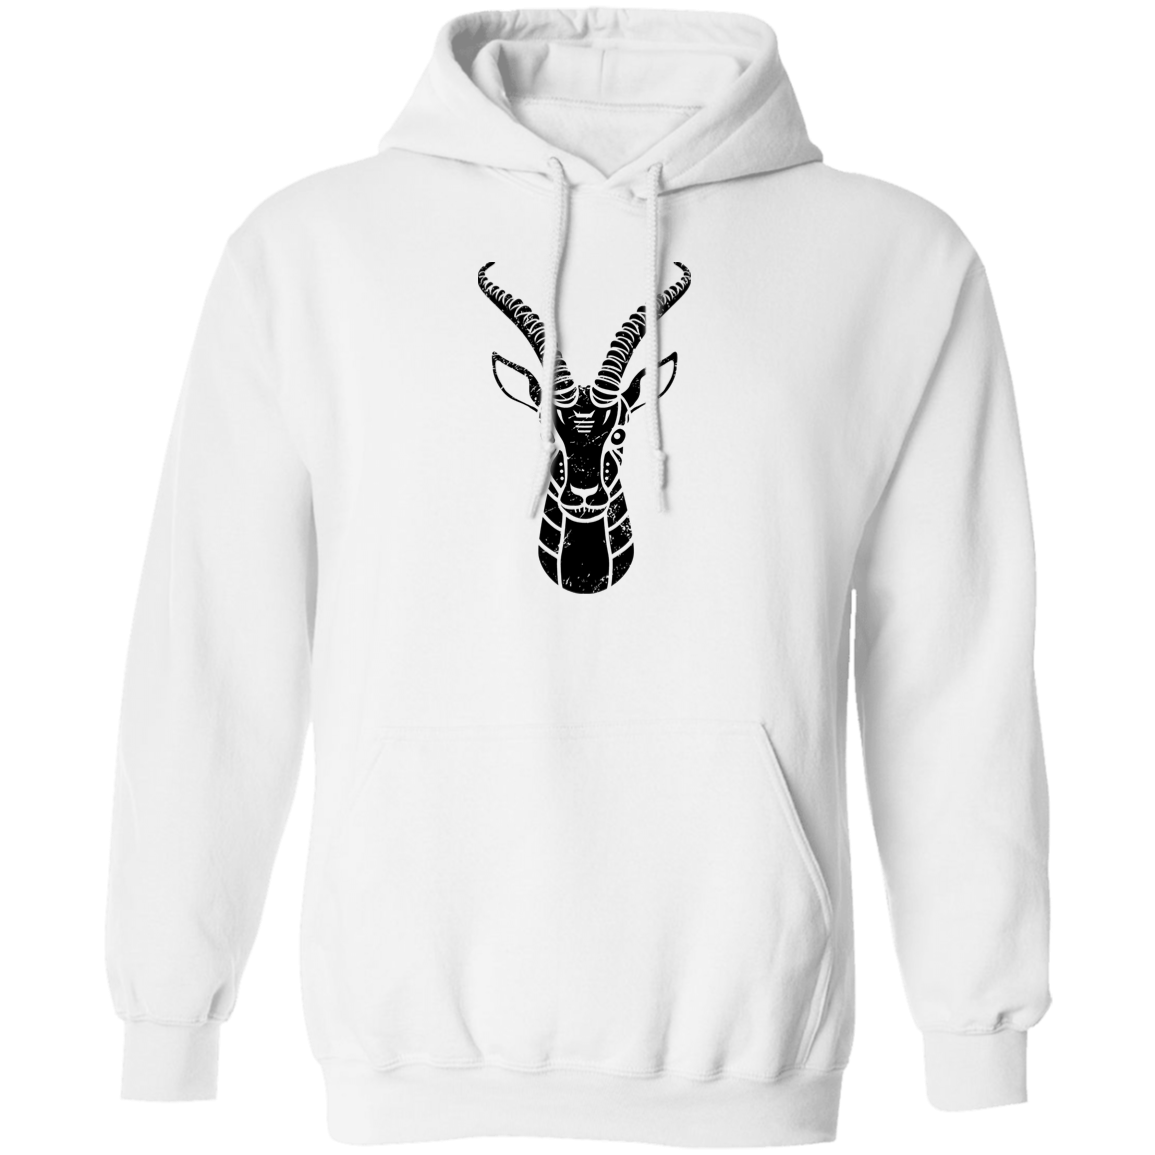 Black Distressed Emblem Hoodies for Adults (Gazelle/Grace)